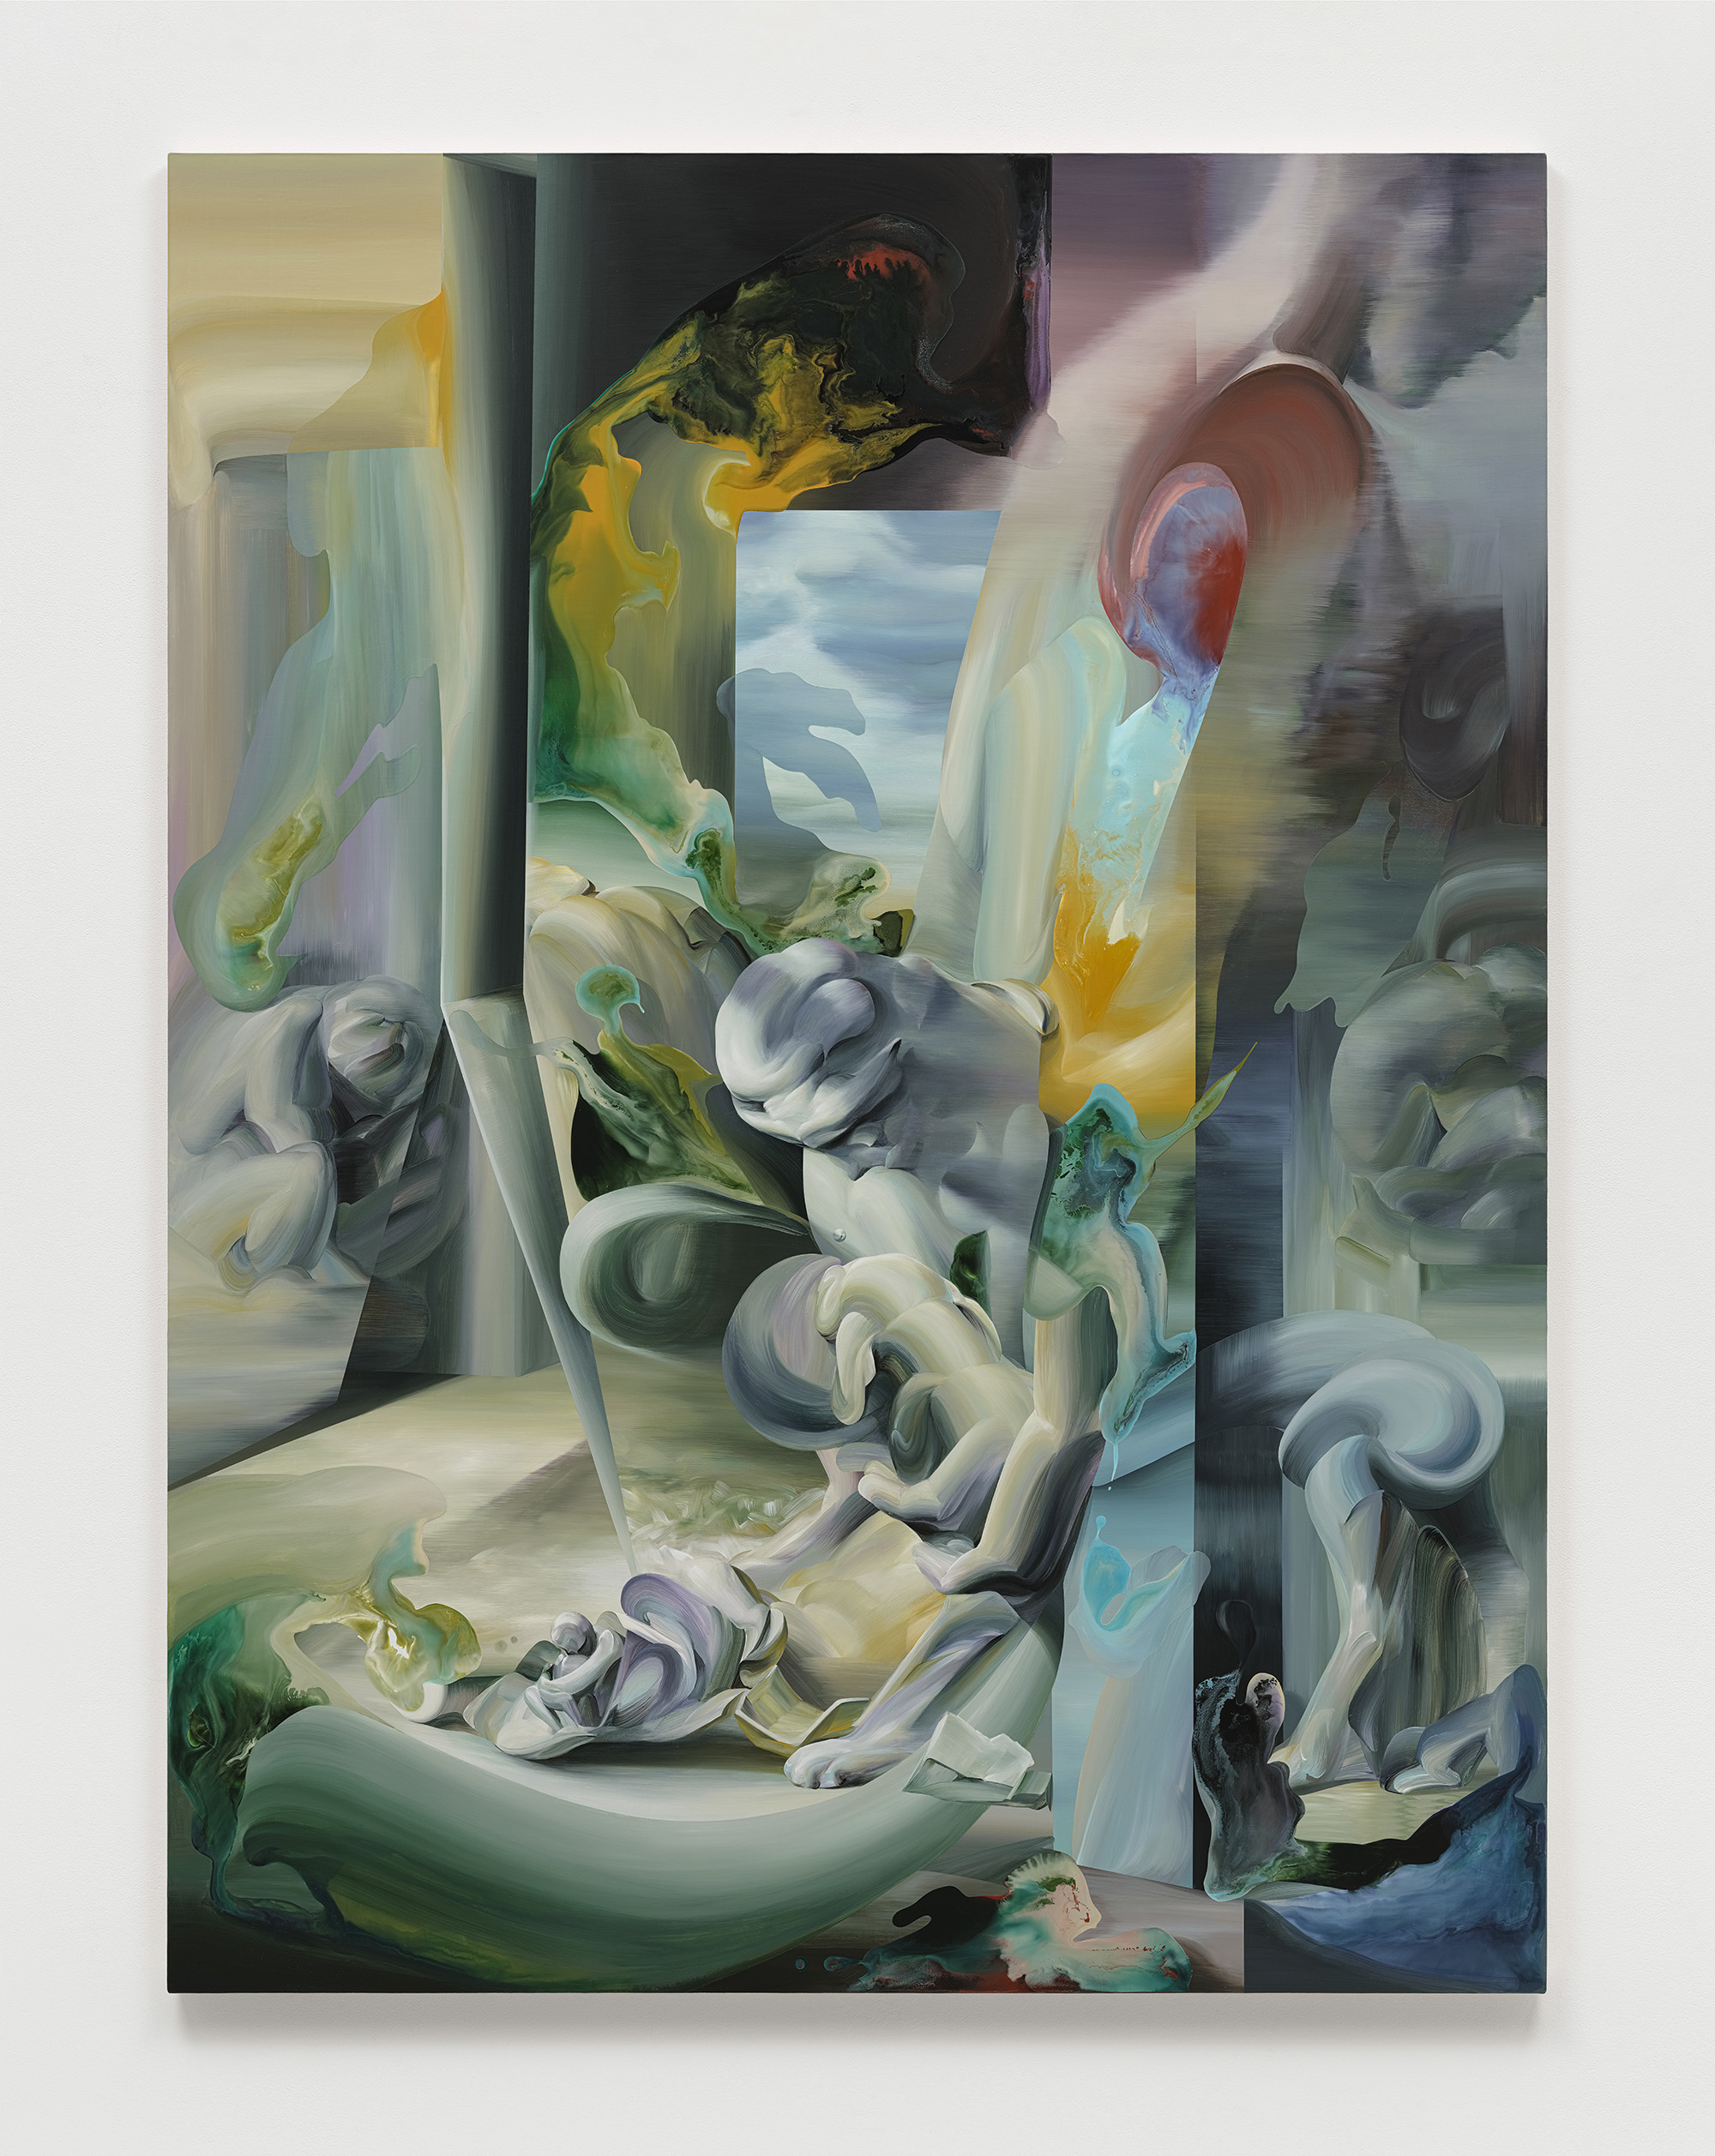 Huang Ko Wei, Narrator, 2022, acrylic on canvas, 180 x 135 cm